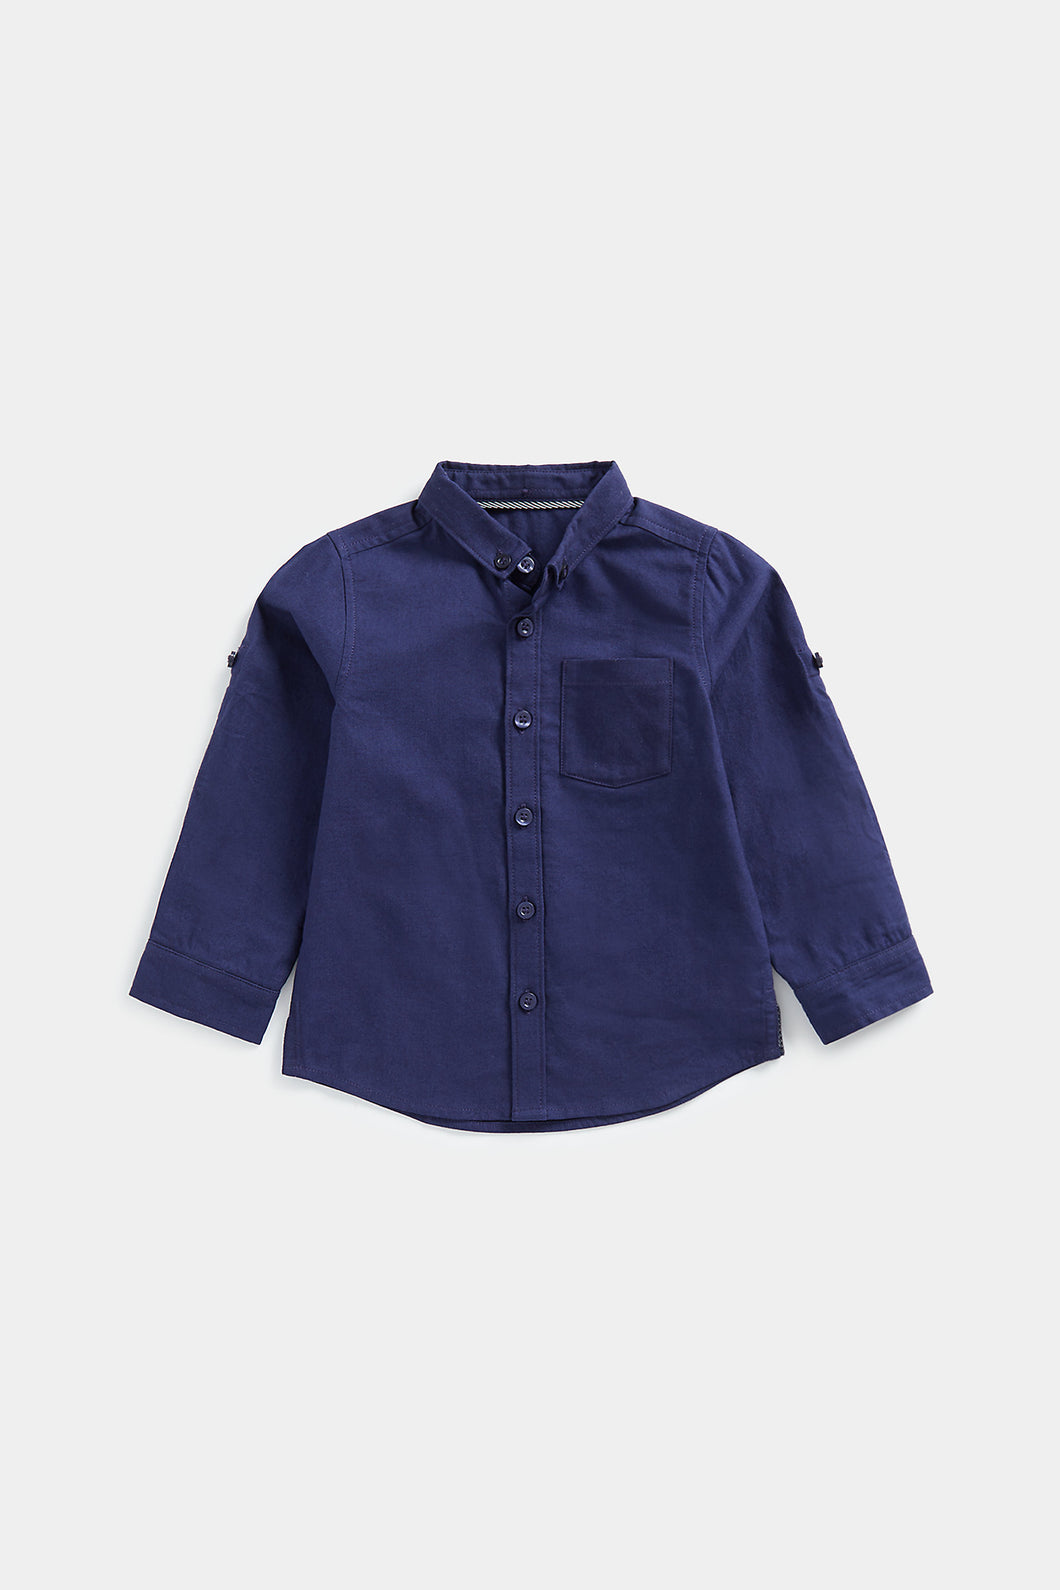 Mothercare Navy Cotton Shirt